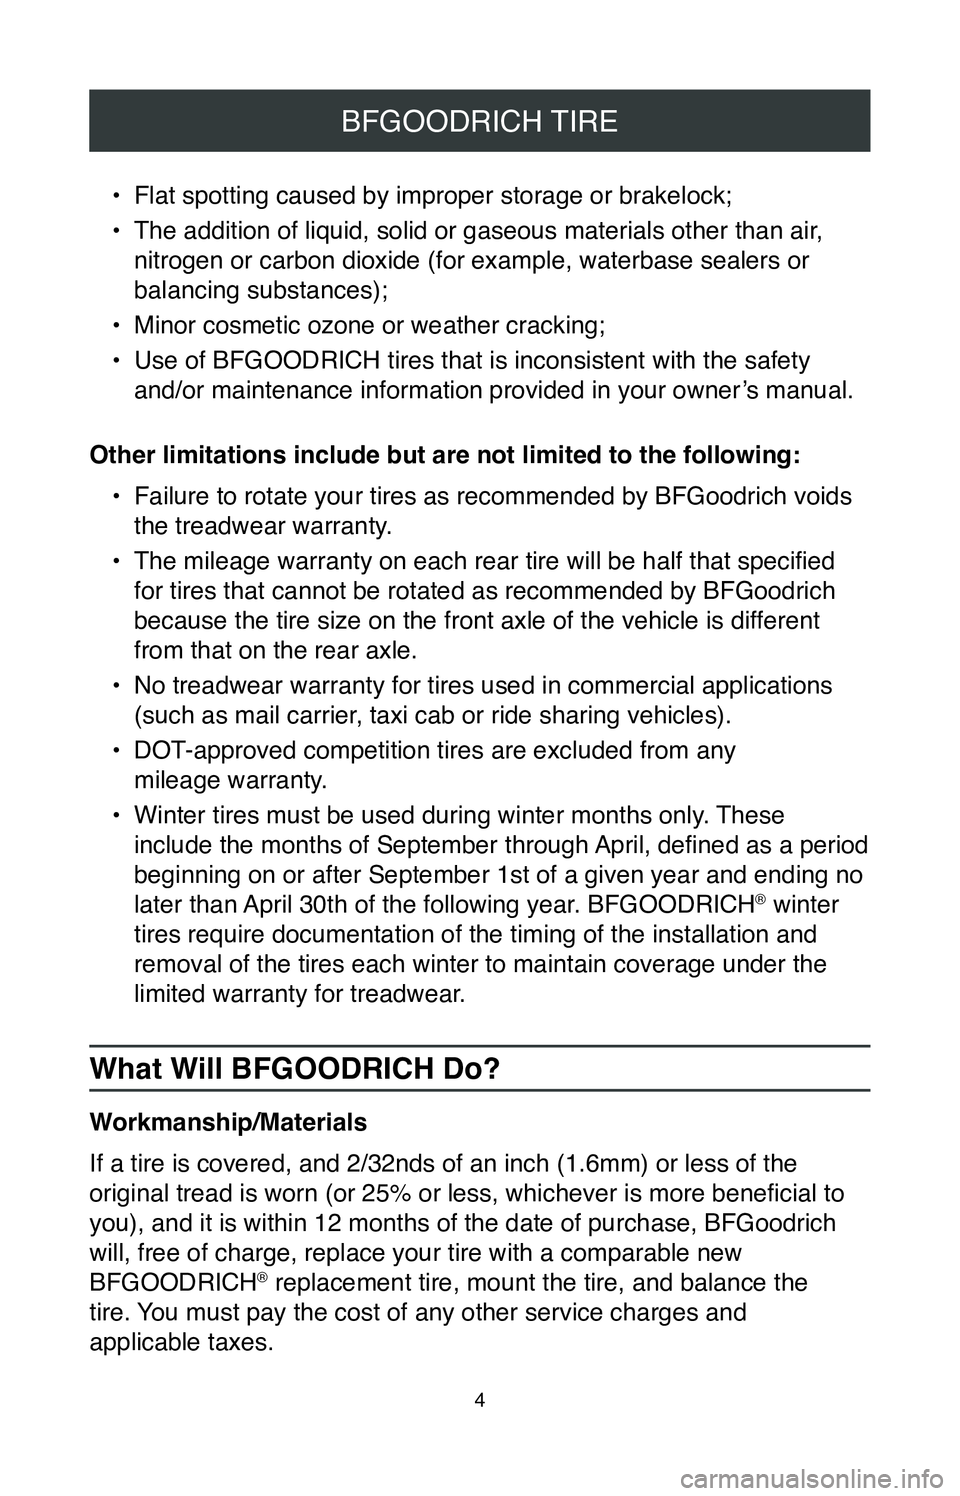 TOYOTA C-HR 2020  Warranties & Maintenance Guides (in English) 4
BFGOODRICH TIRE
